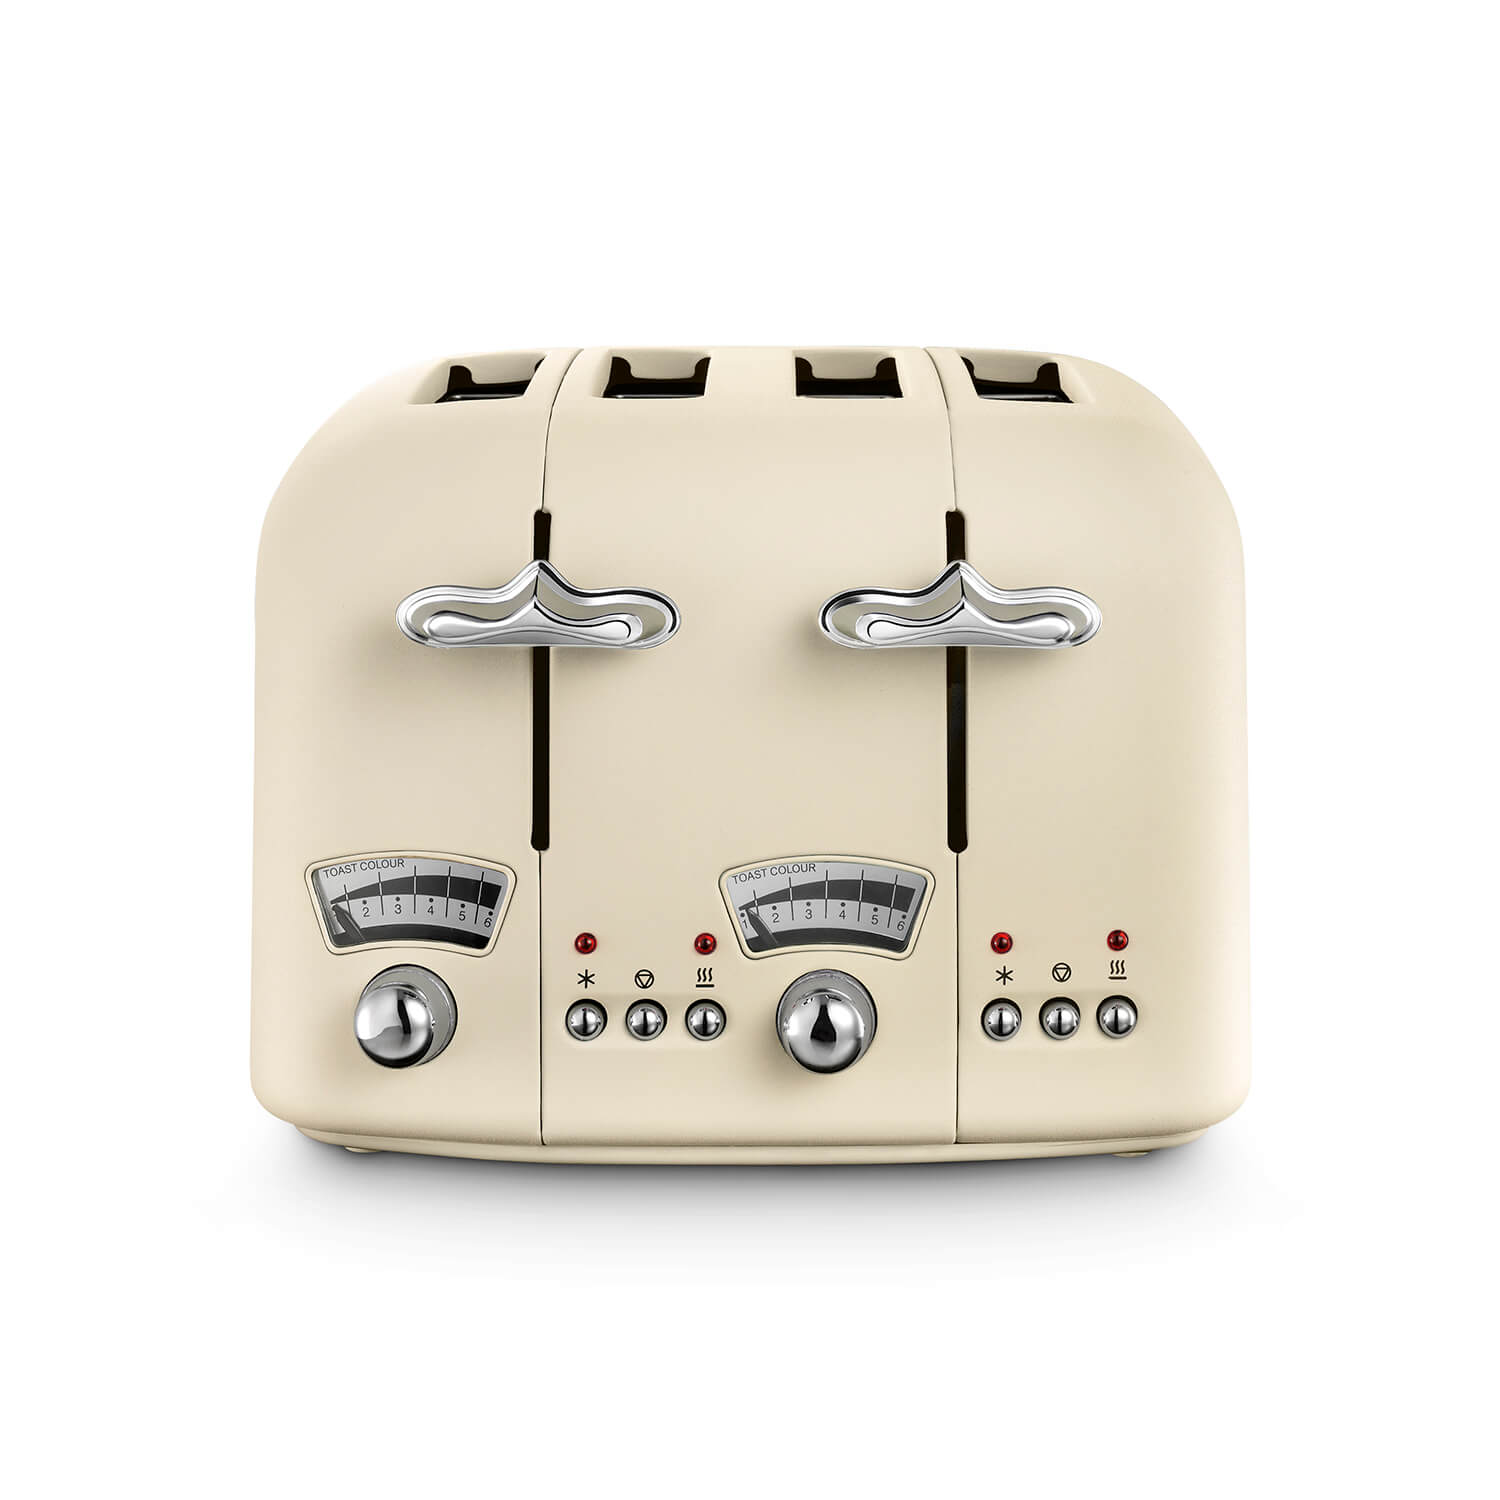 Delonghi 4-Slice Toaster - Cream | CT04BG 1 Shaws Department Stores